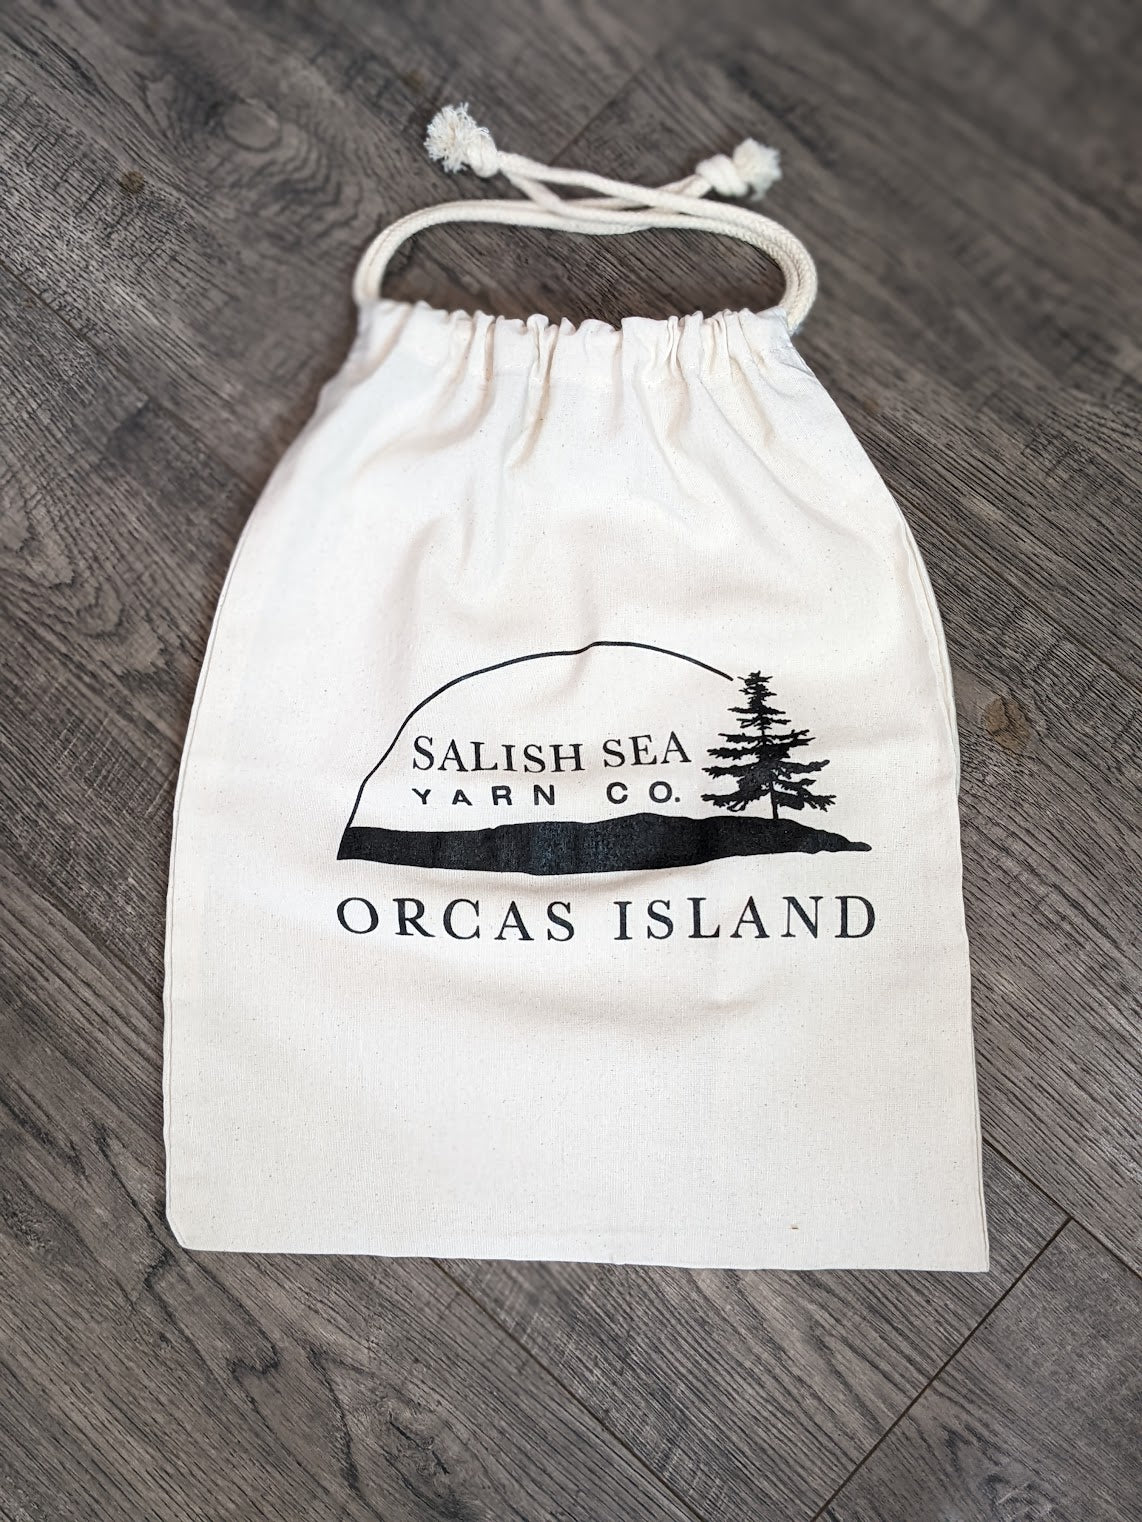 Salish Sea Yarn Co. Project Bags